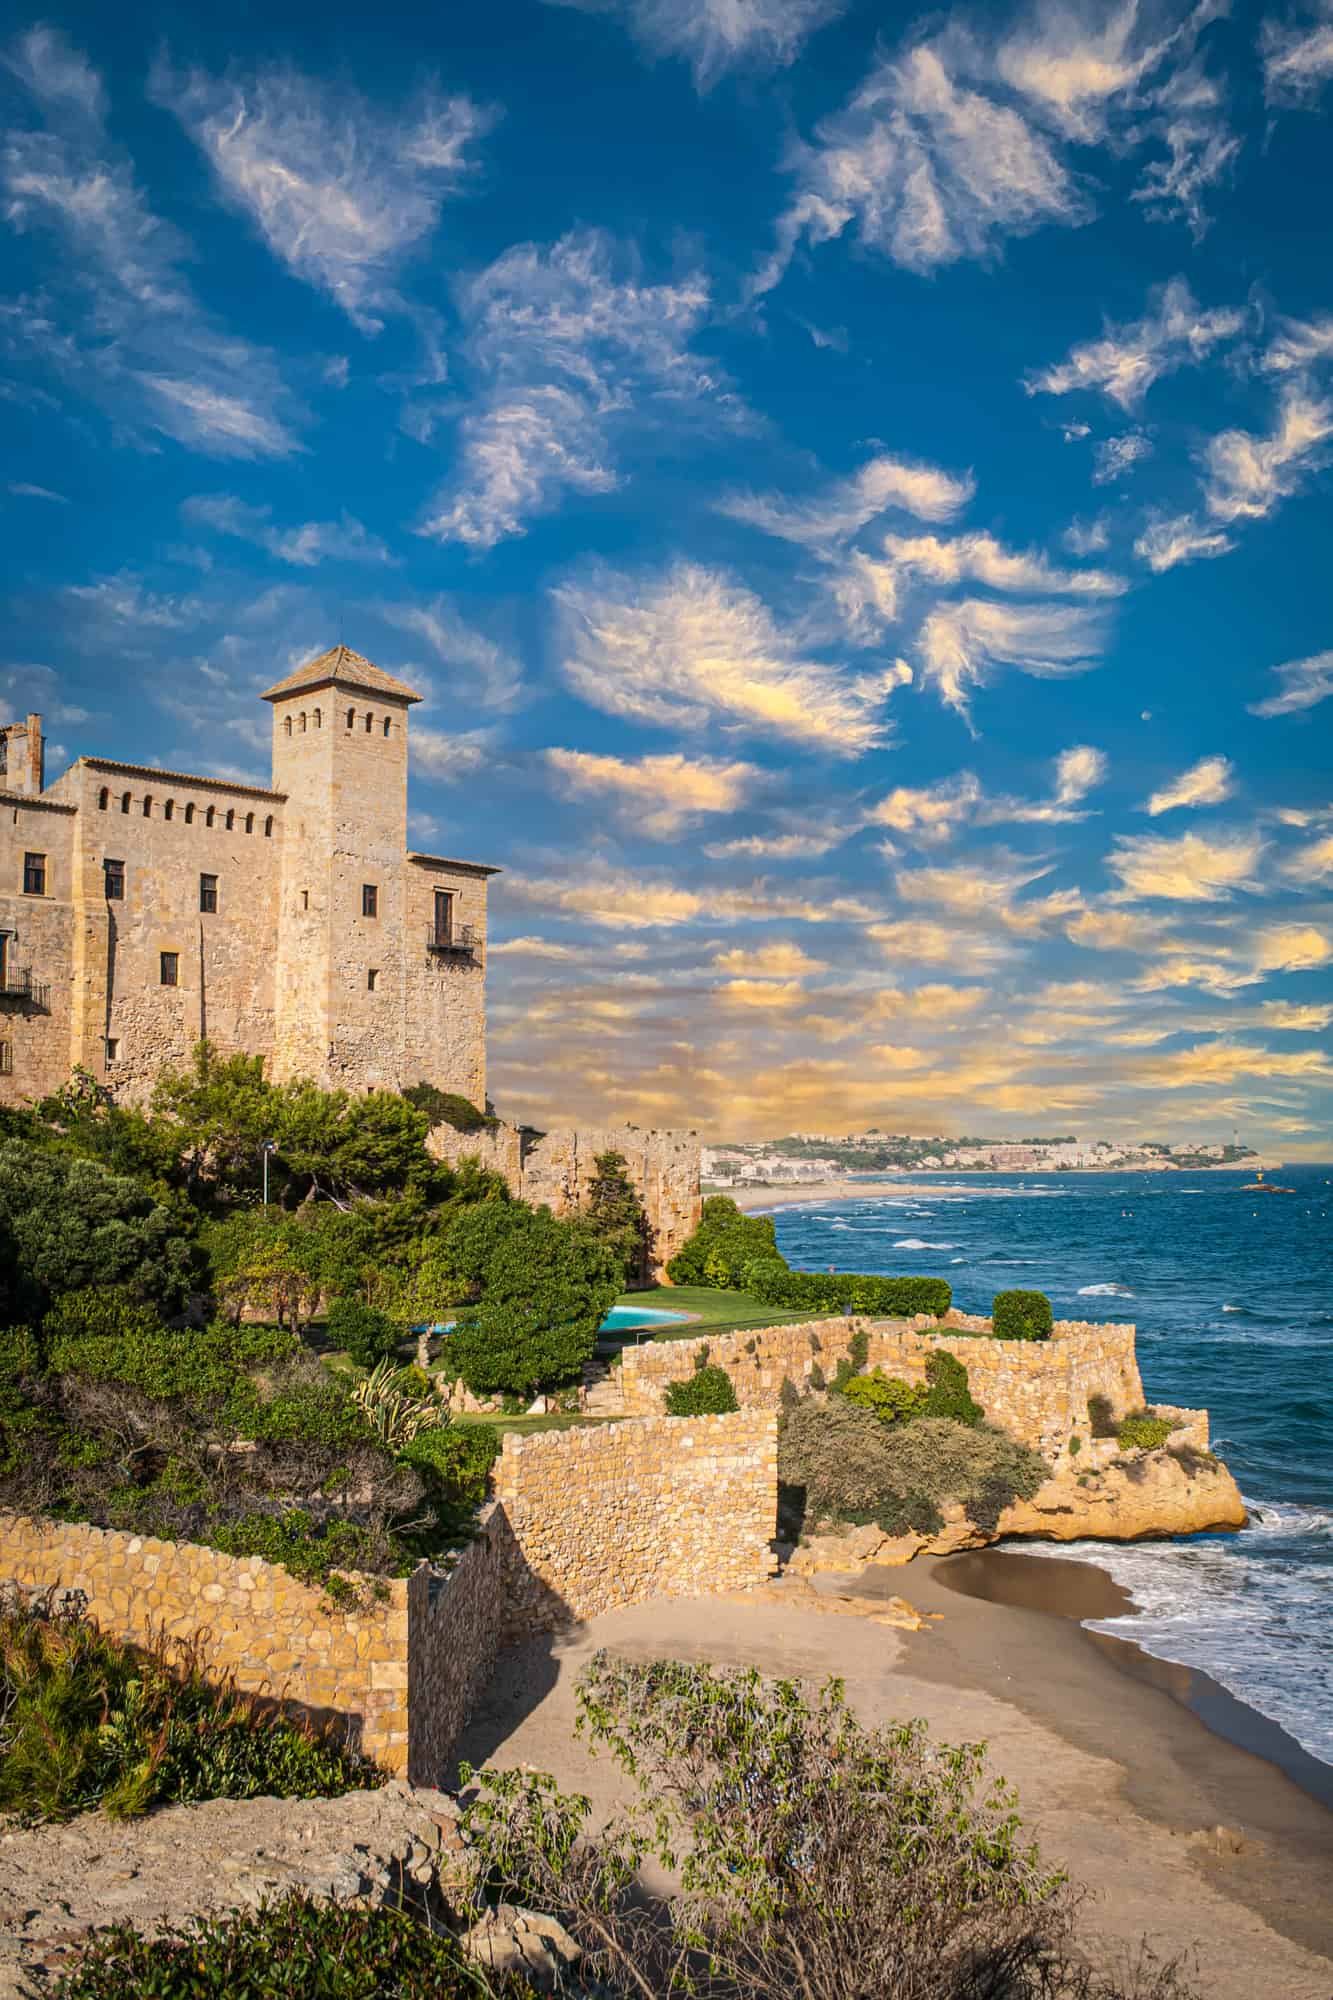 A view of Tamarit Castle and the mediterranean sea in Tarragona, Spain